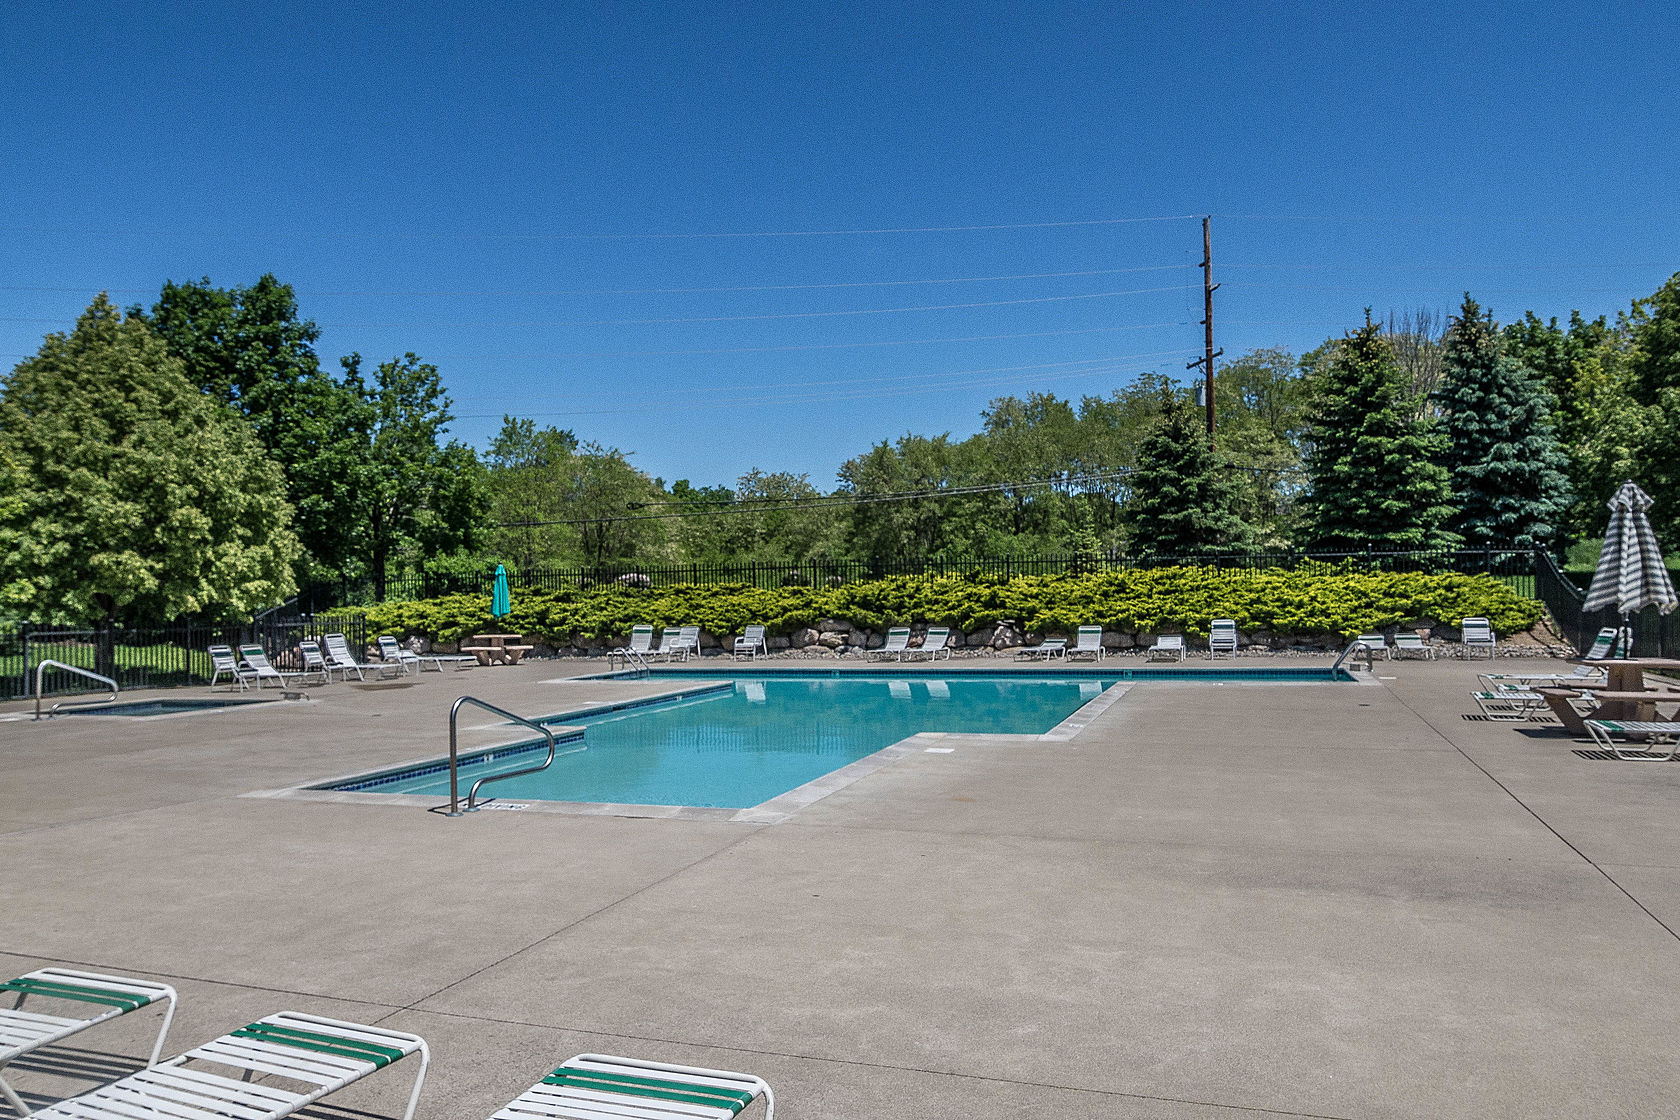 Pine Creek Ridge swimming pool and spa are located at the Villas at Pine Creek Ridge